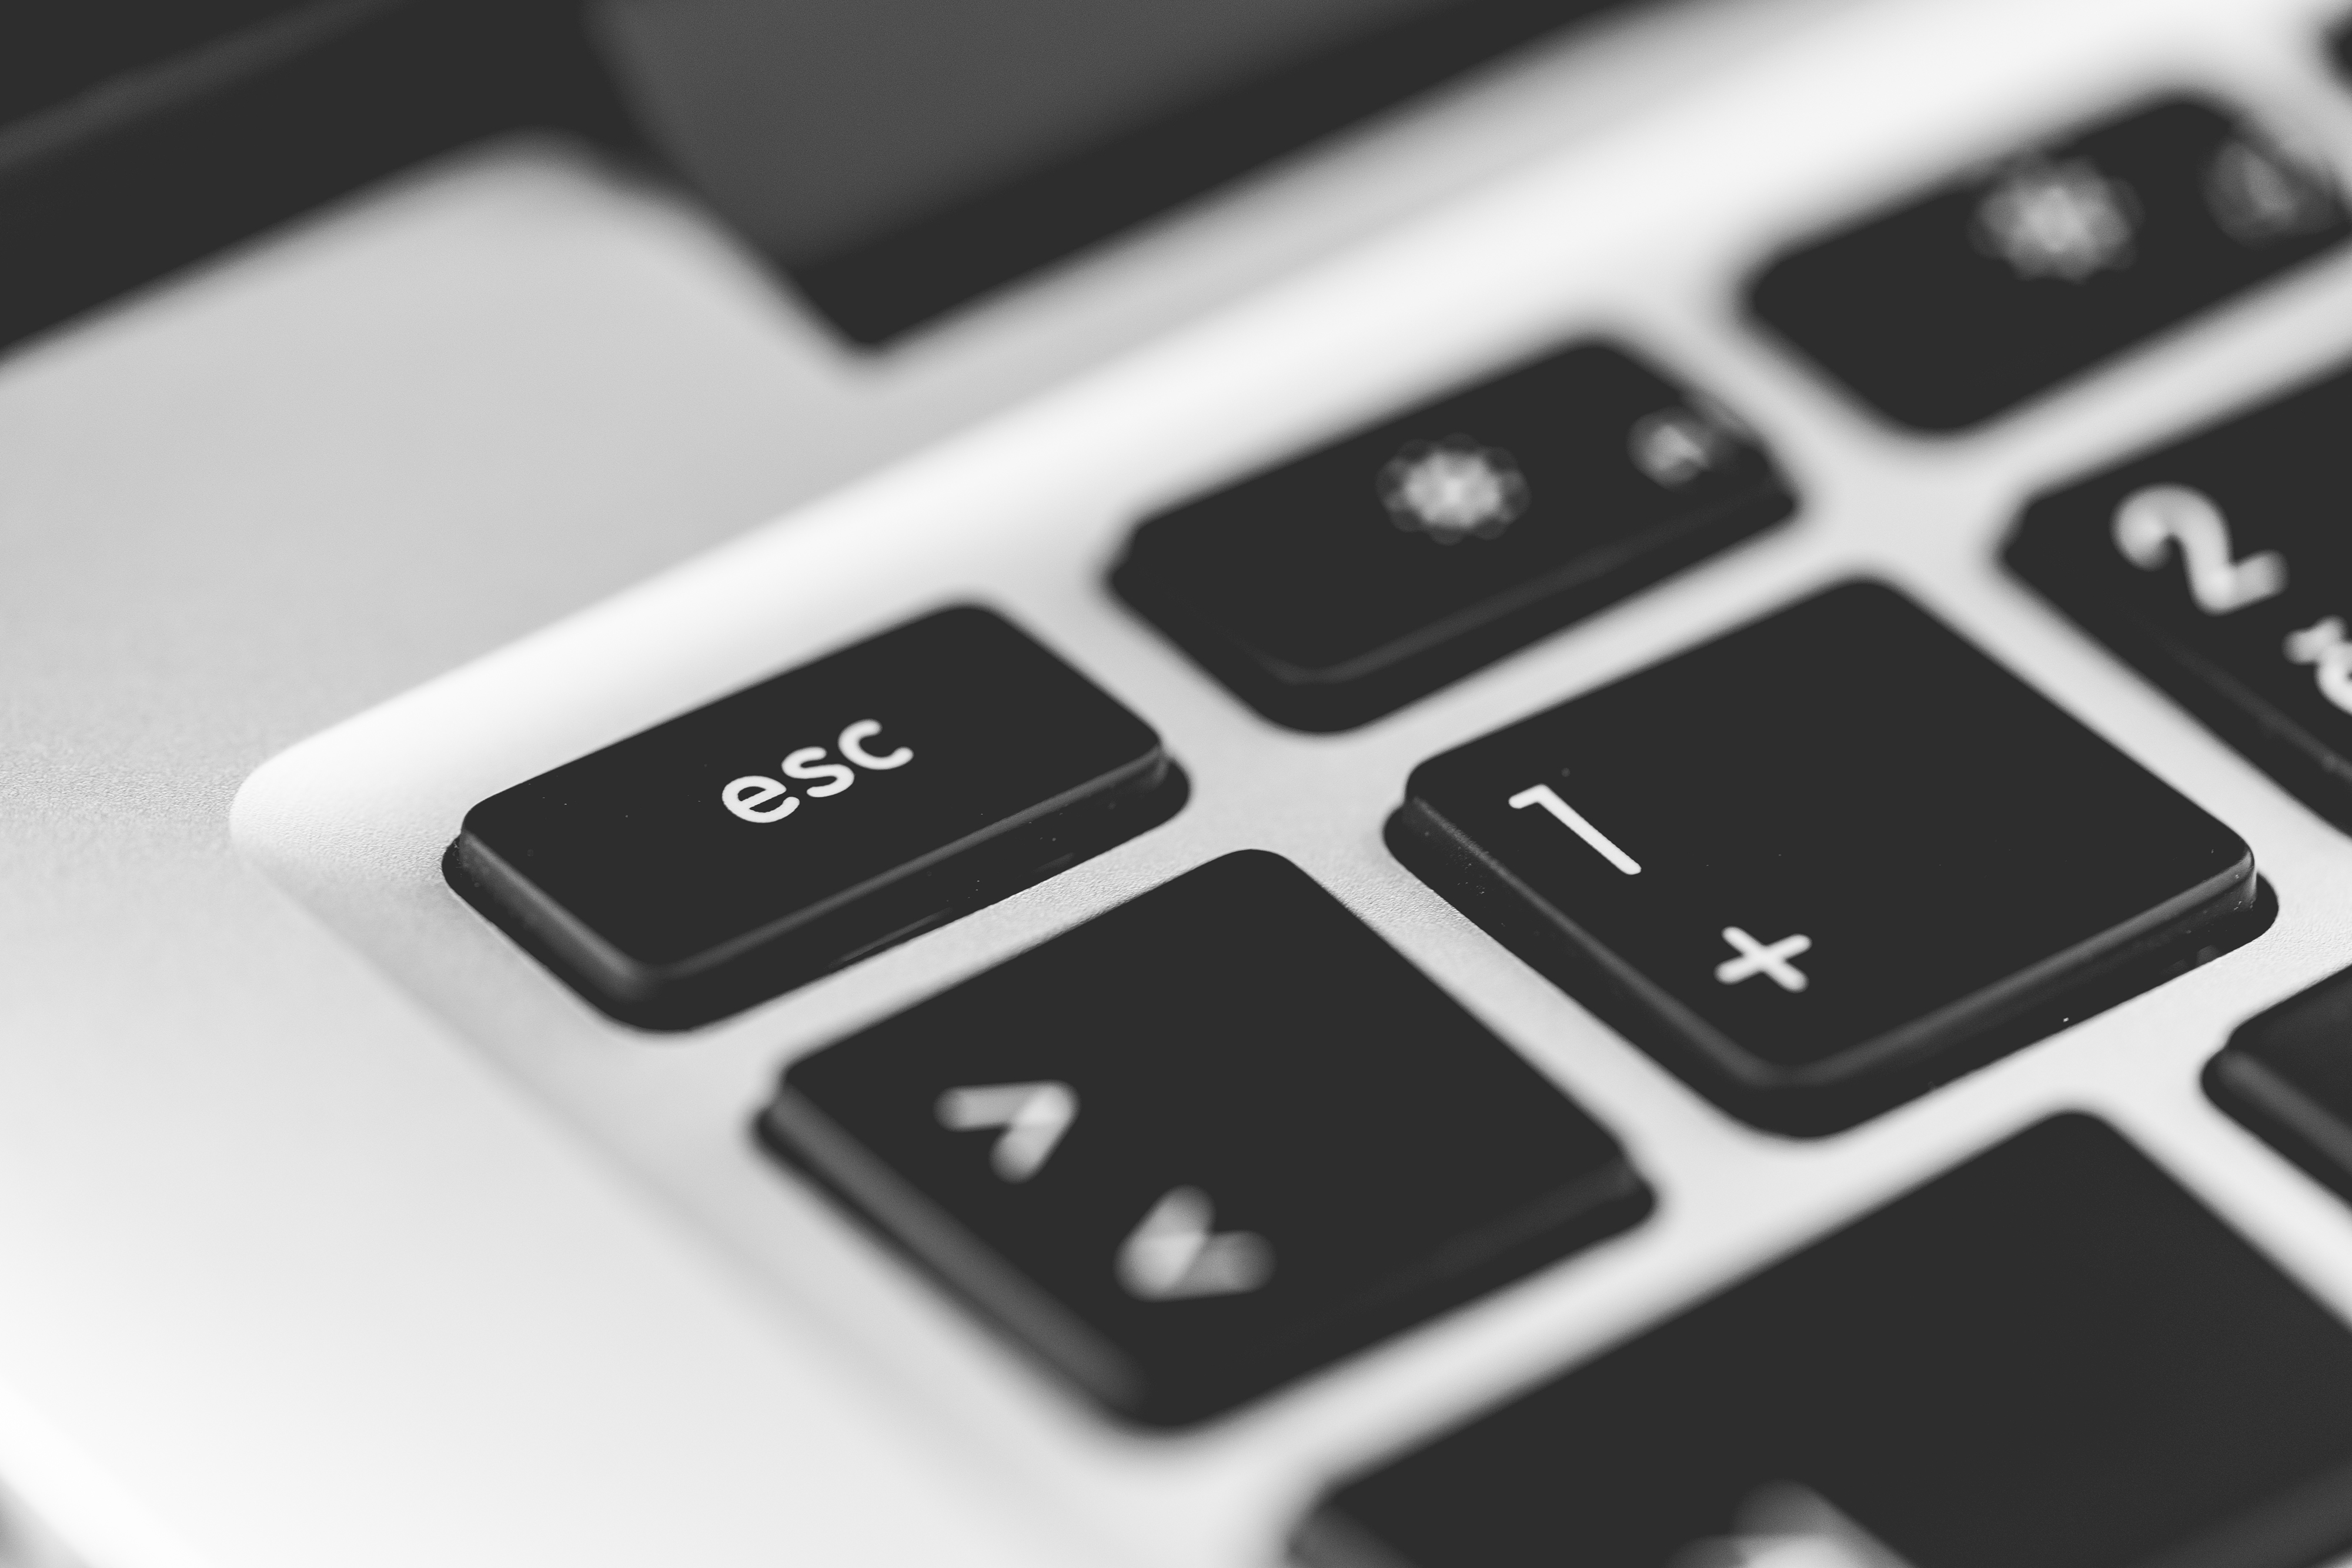 escape-key-laptop-keyboard-close-up-picjumbo-com